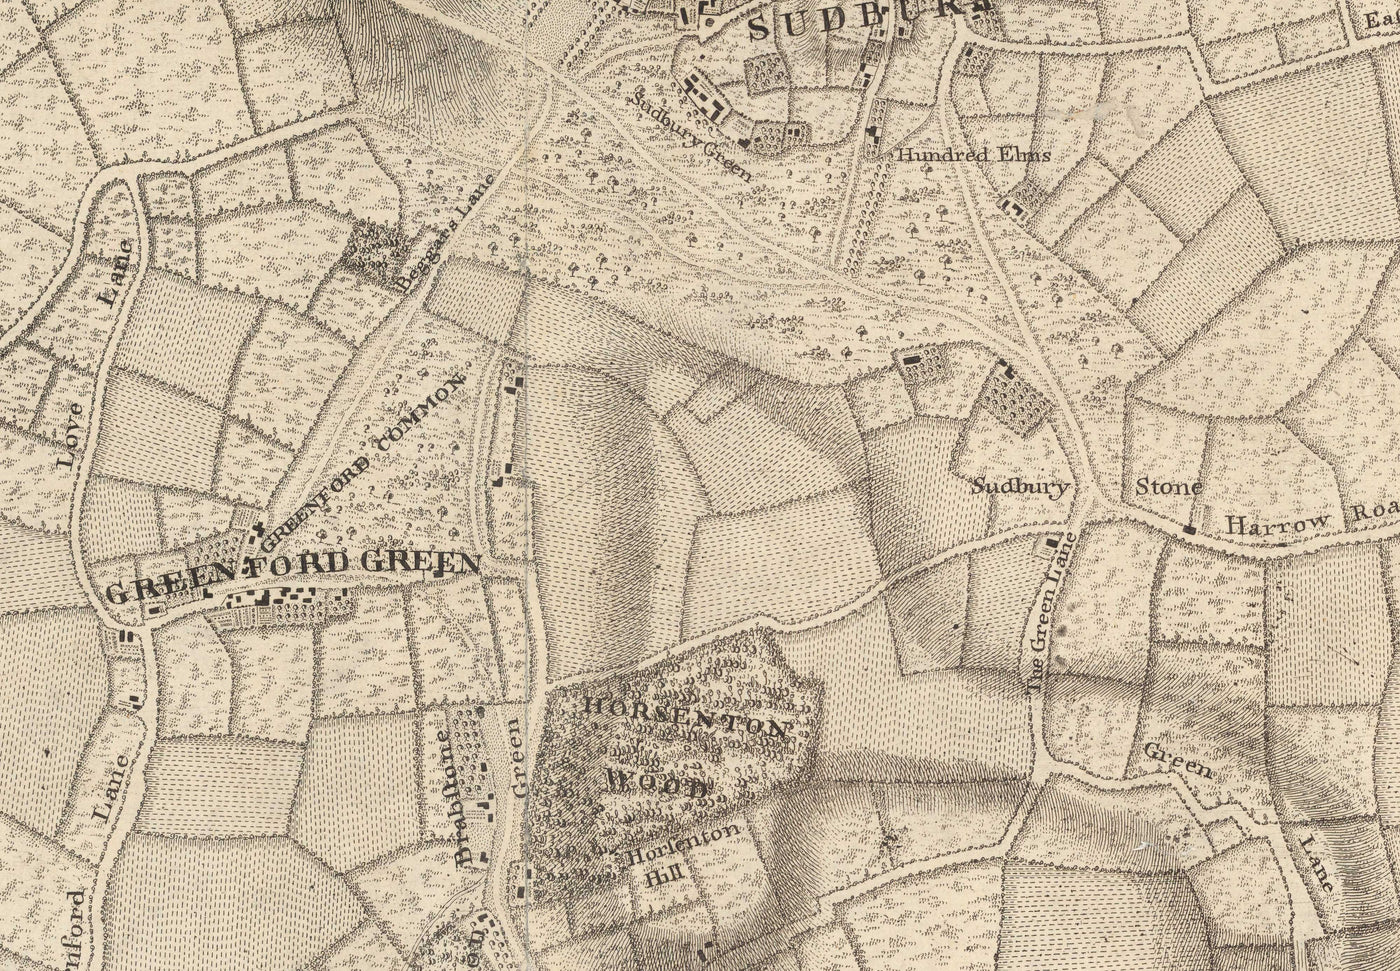 Old Map of North West London in 1746 by John Rocque - Wembley, Preston, Alperton, Northolt, Roxeth Green, W3, W5, W7,W13, NW10